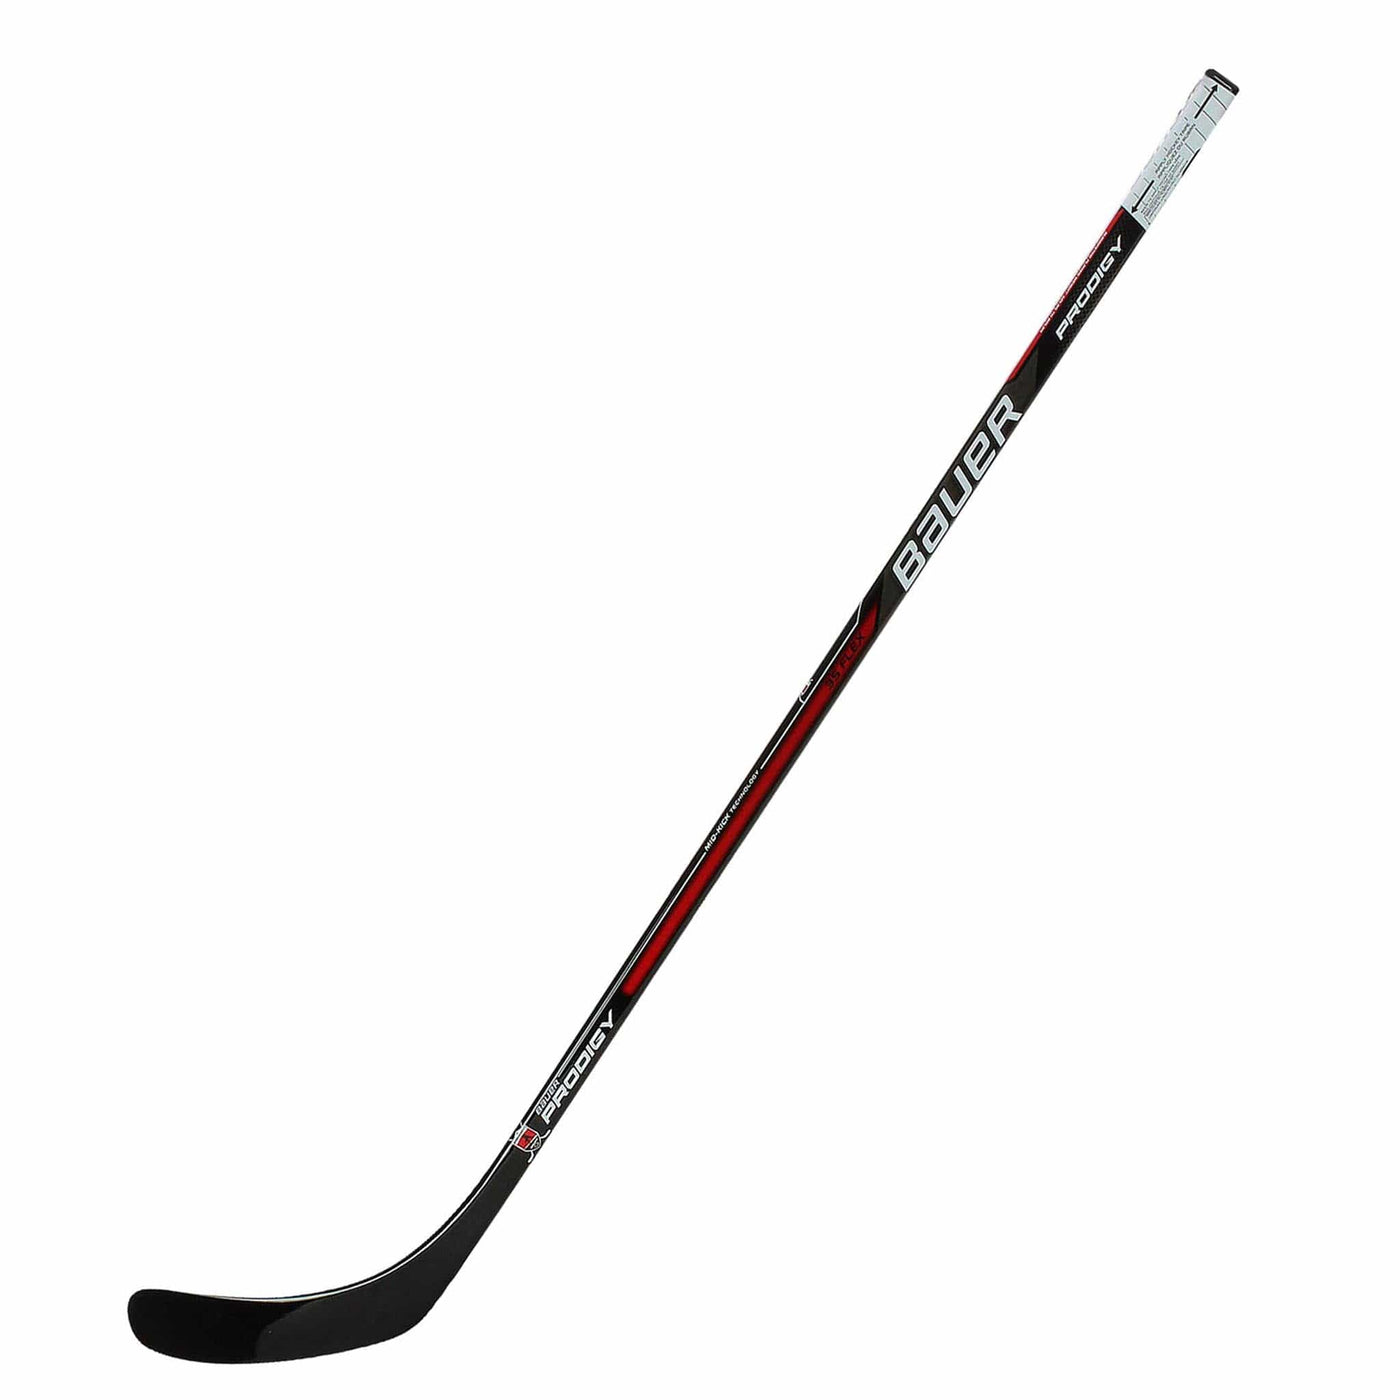 Bauer Prodigy Youth Hockey Stick (2016) - 35 Flex